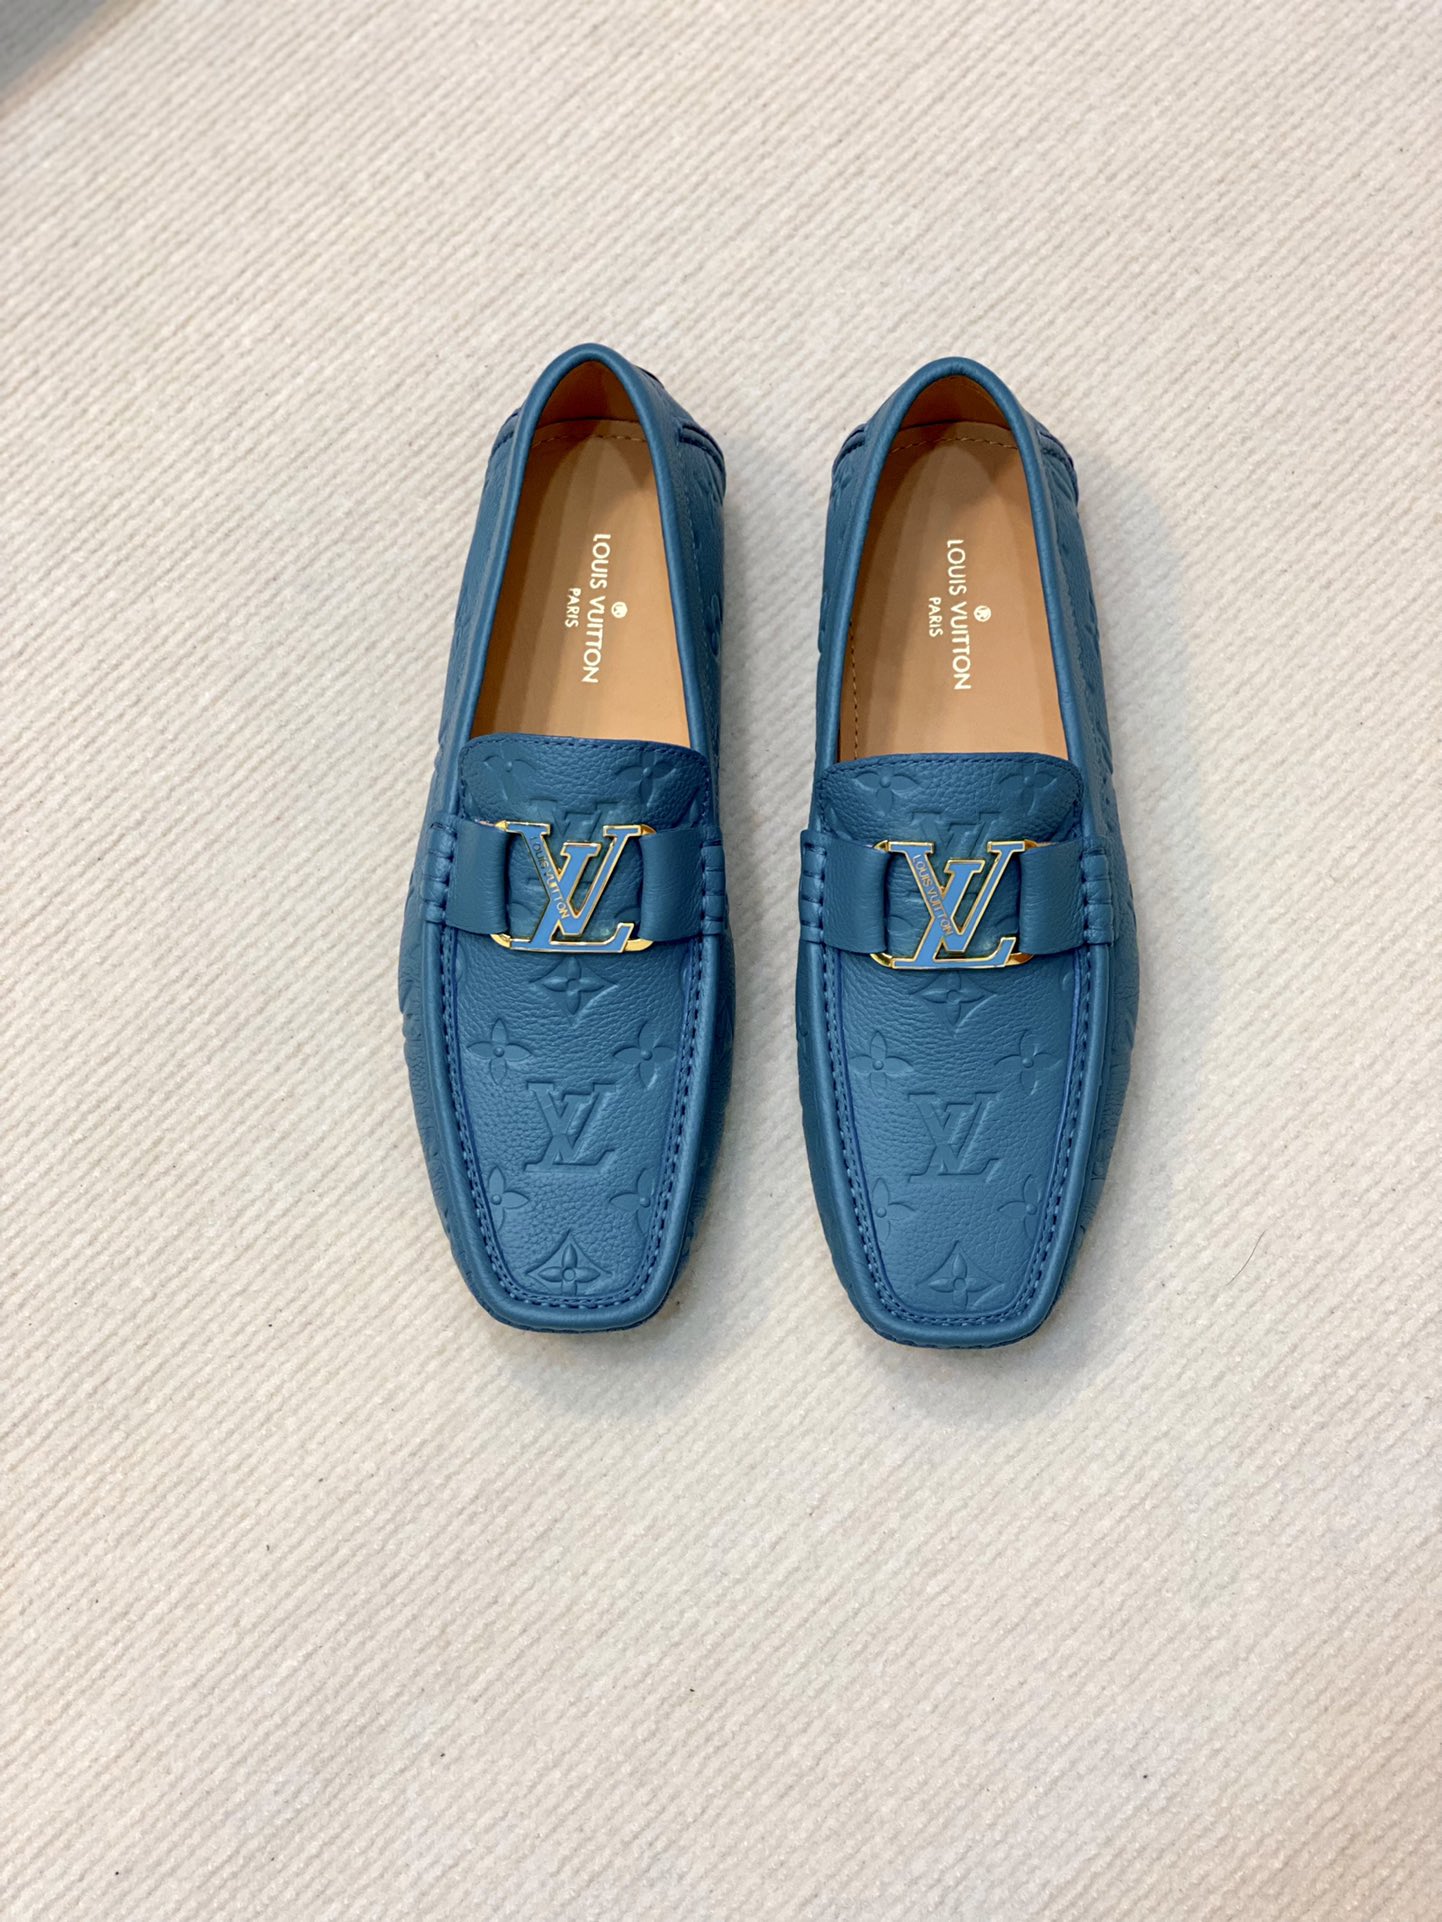 Louis Vuitton Shoes Moccasin Replcia Cheap From China
 Calfskin Cowhide